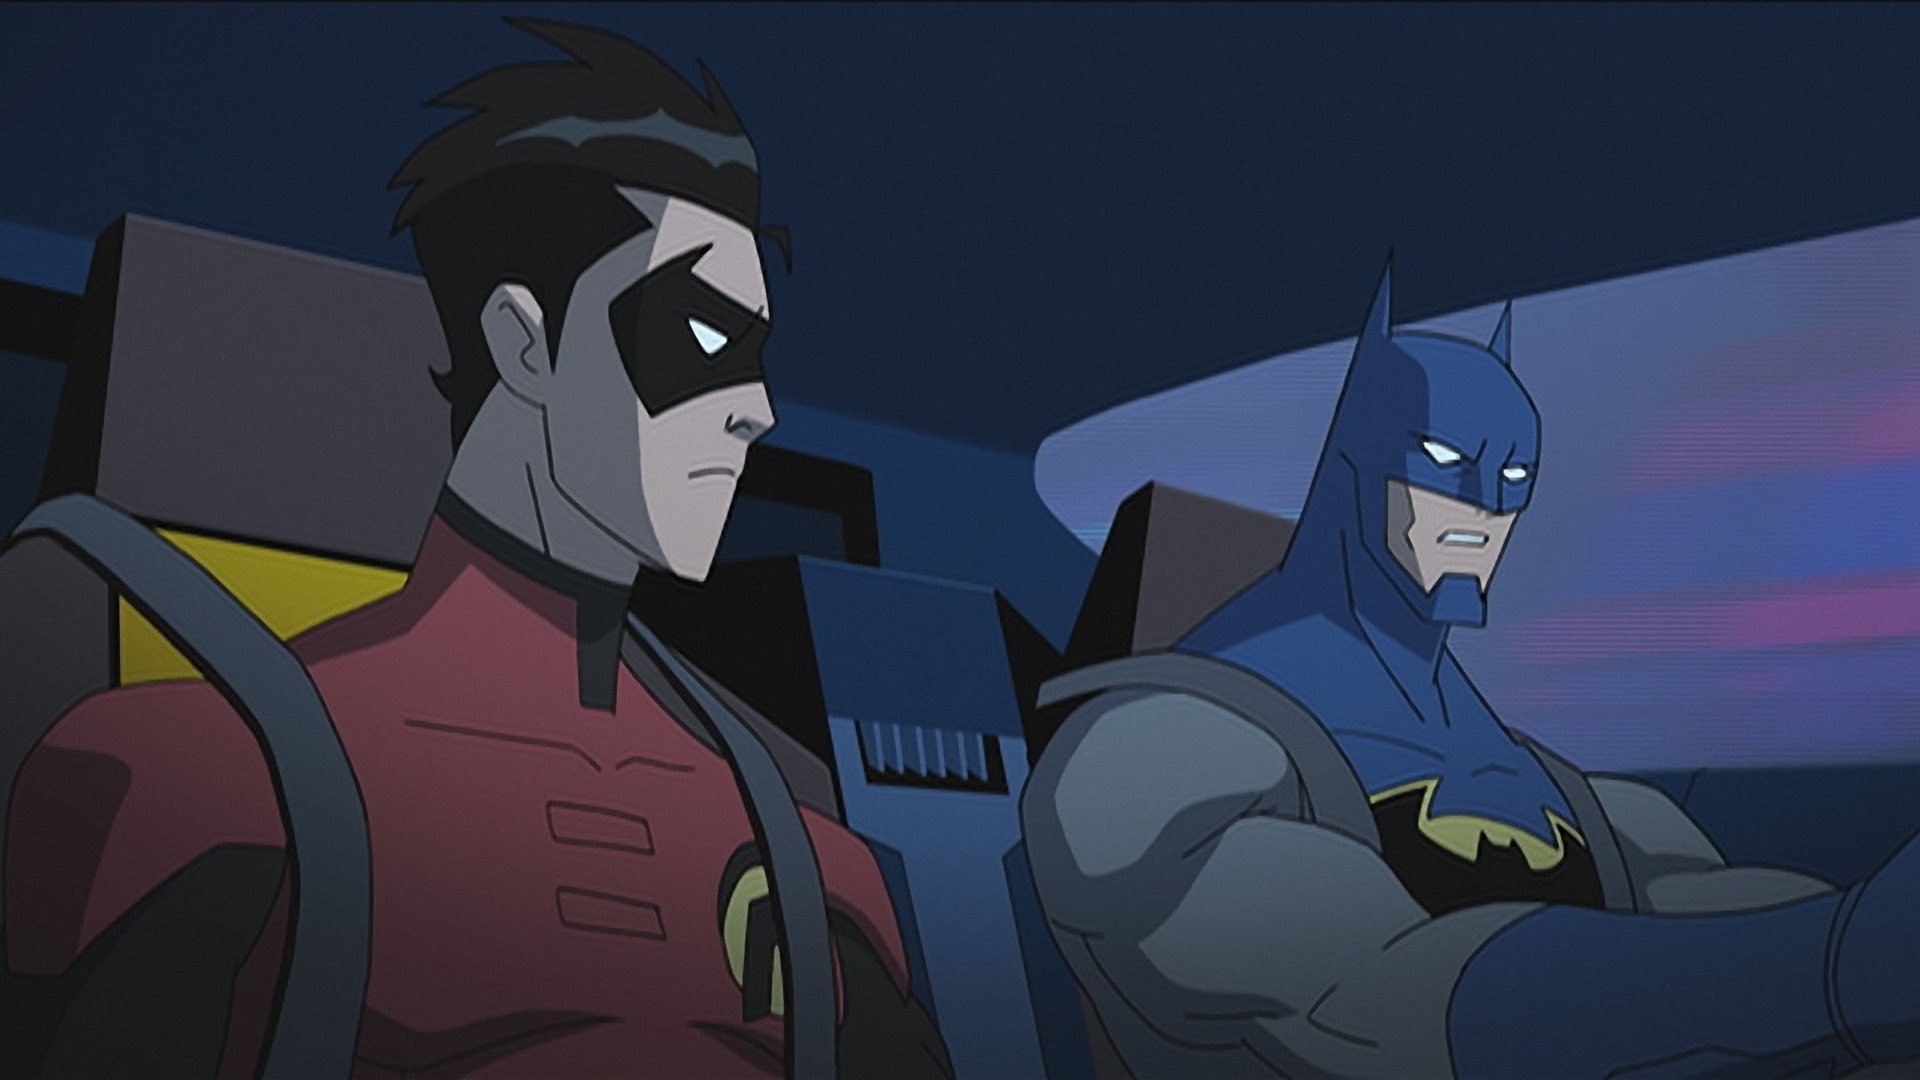 Batman Unlimited: Mechs vs. Mutants - Movies on Google Play